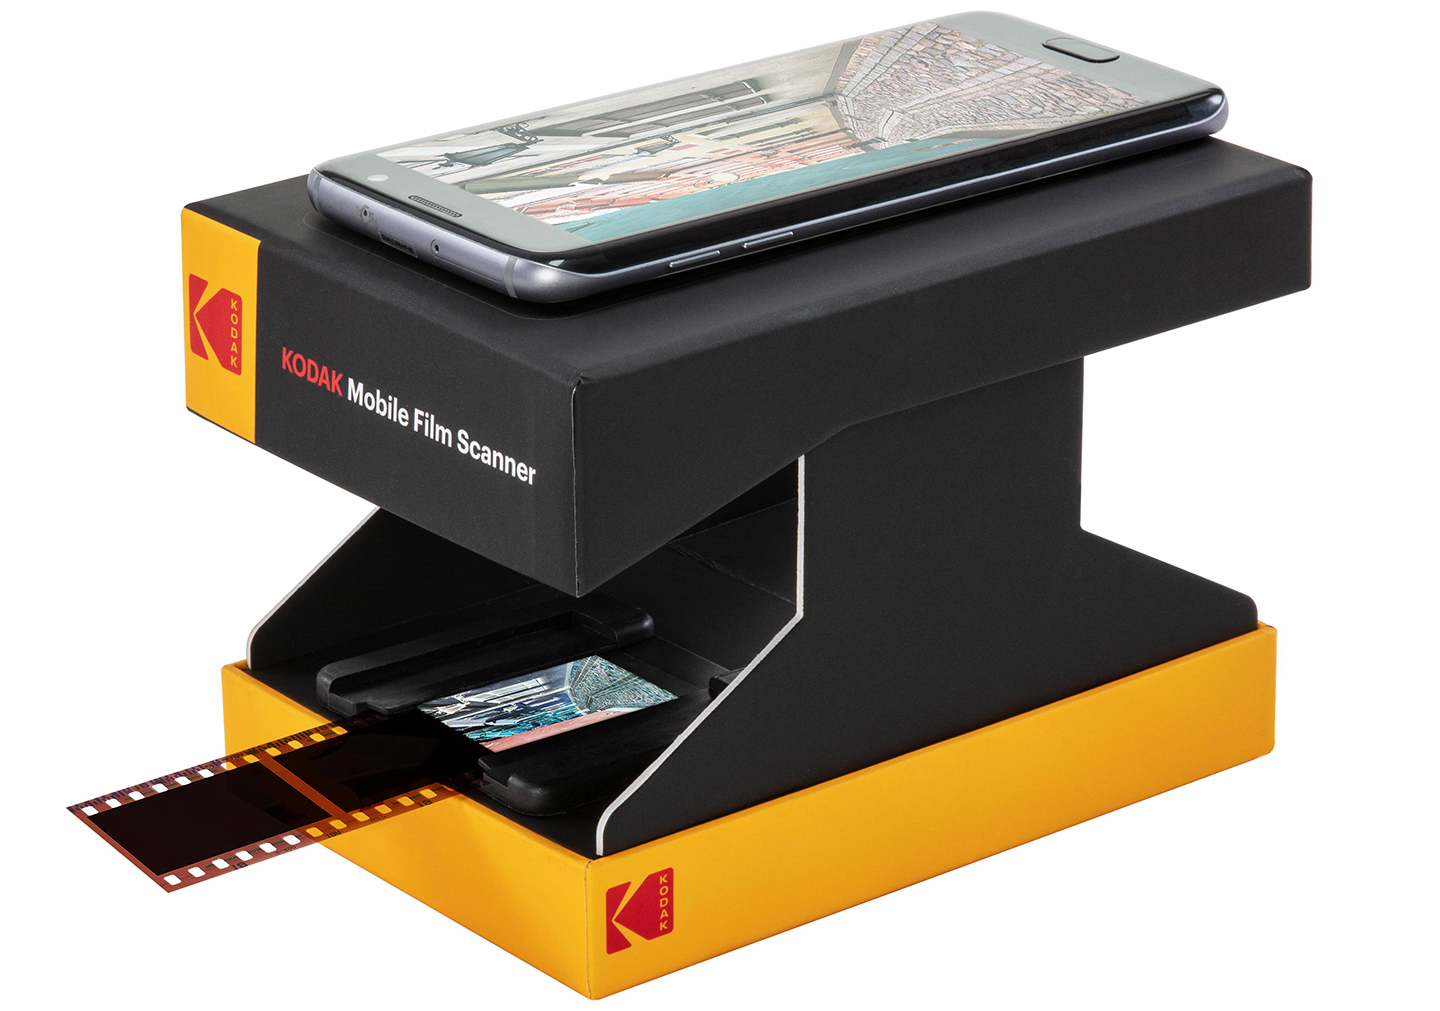 Kodak Printers, Scanners, and More at C+A Global